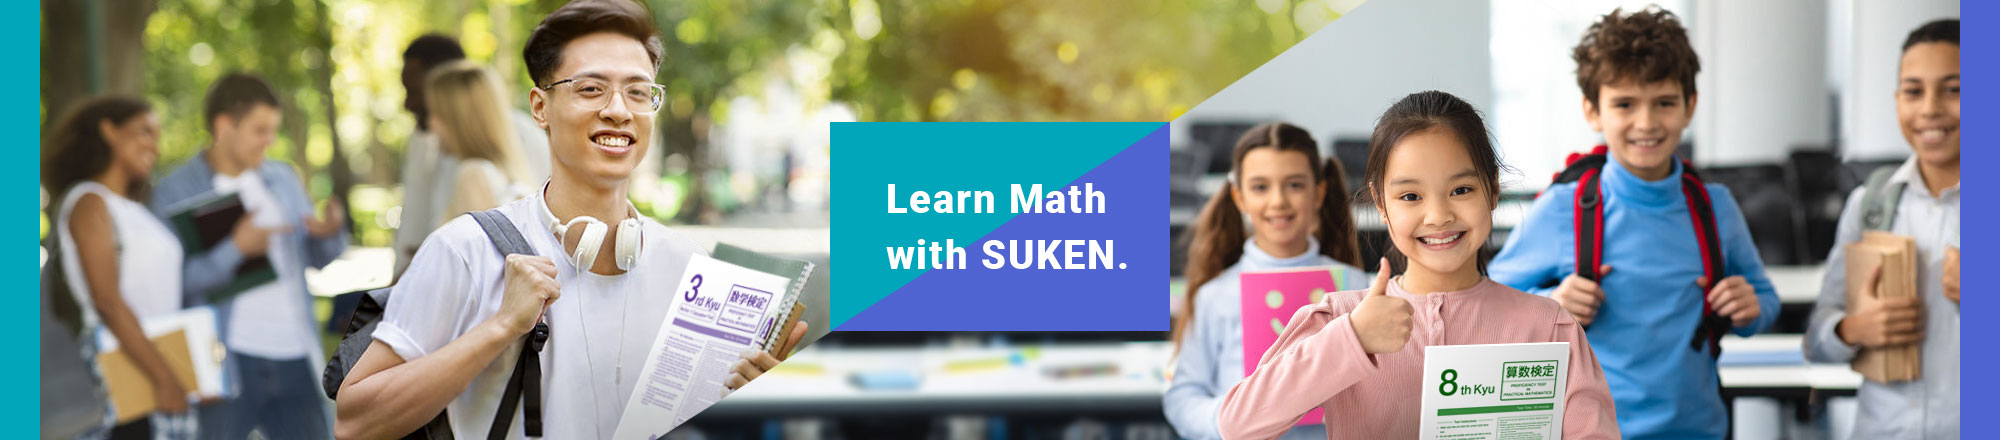 Learn Math with Suken